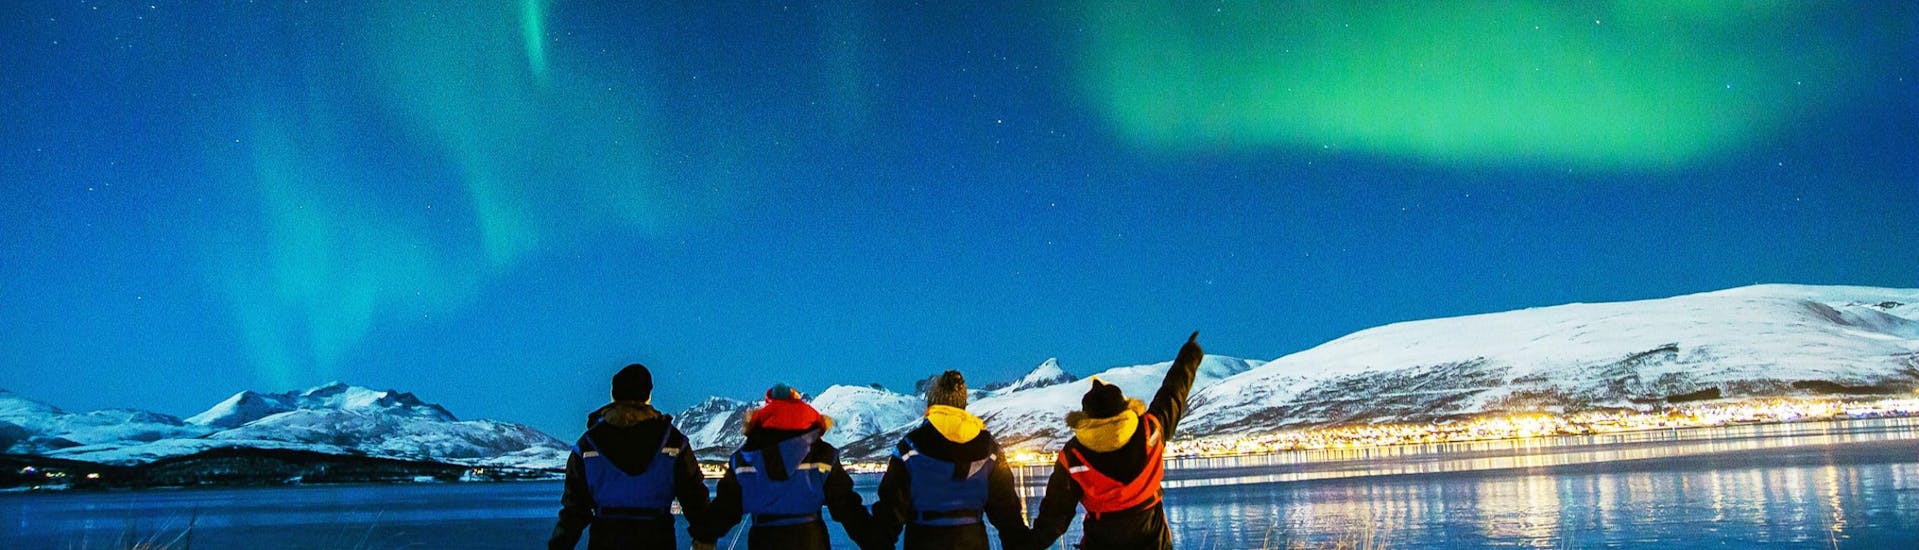 A group of people is admiring the northern lights in Tromsø, Norway.